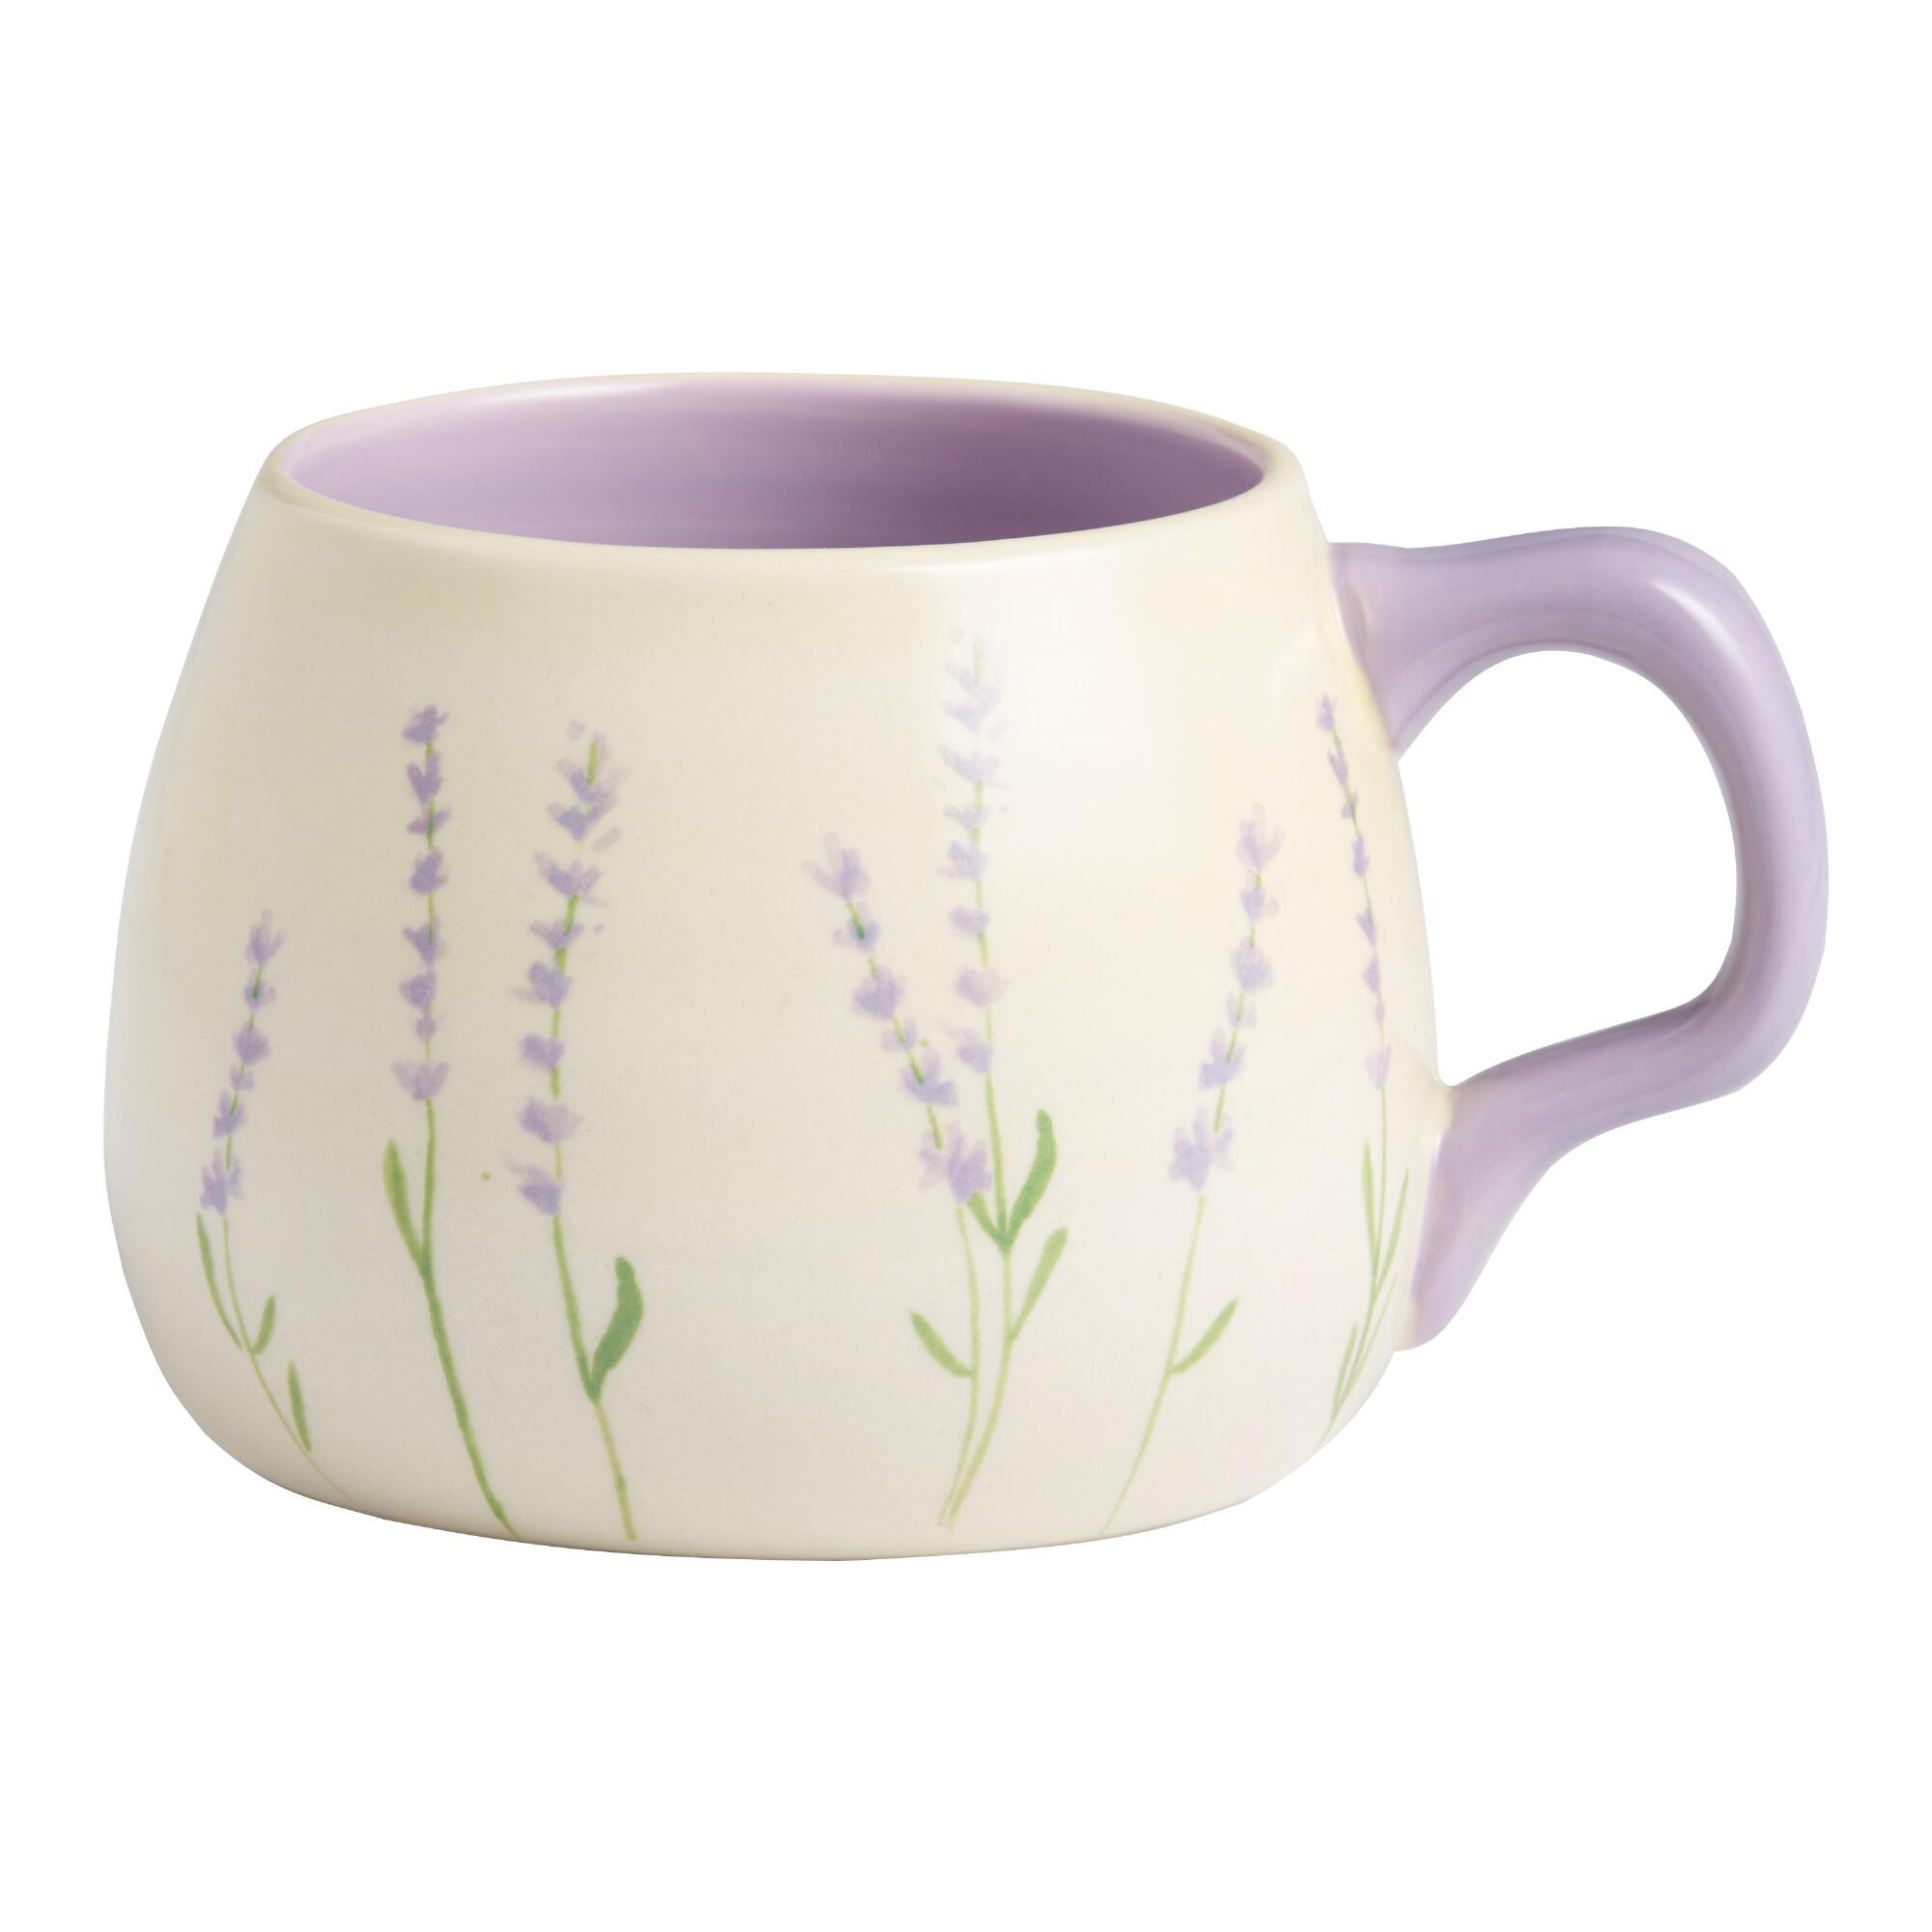 Cream and Lavender Mug - Stoneware by World Market